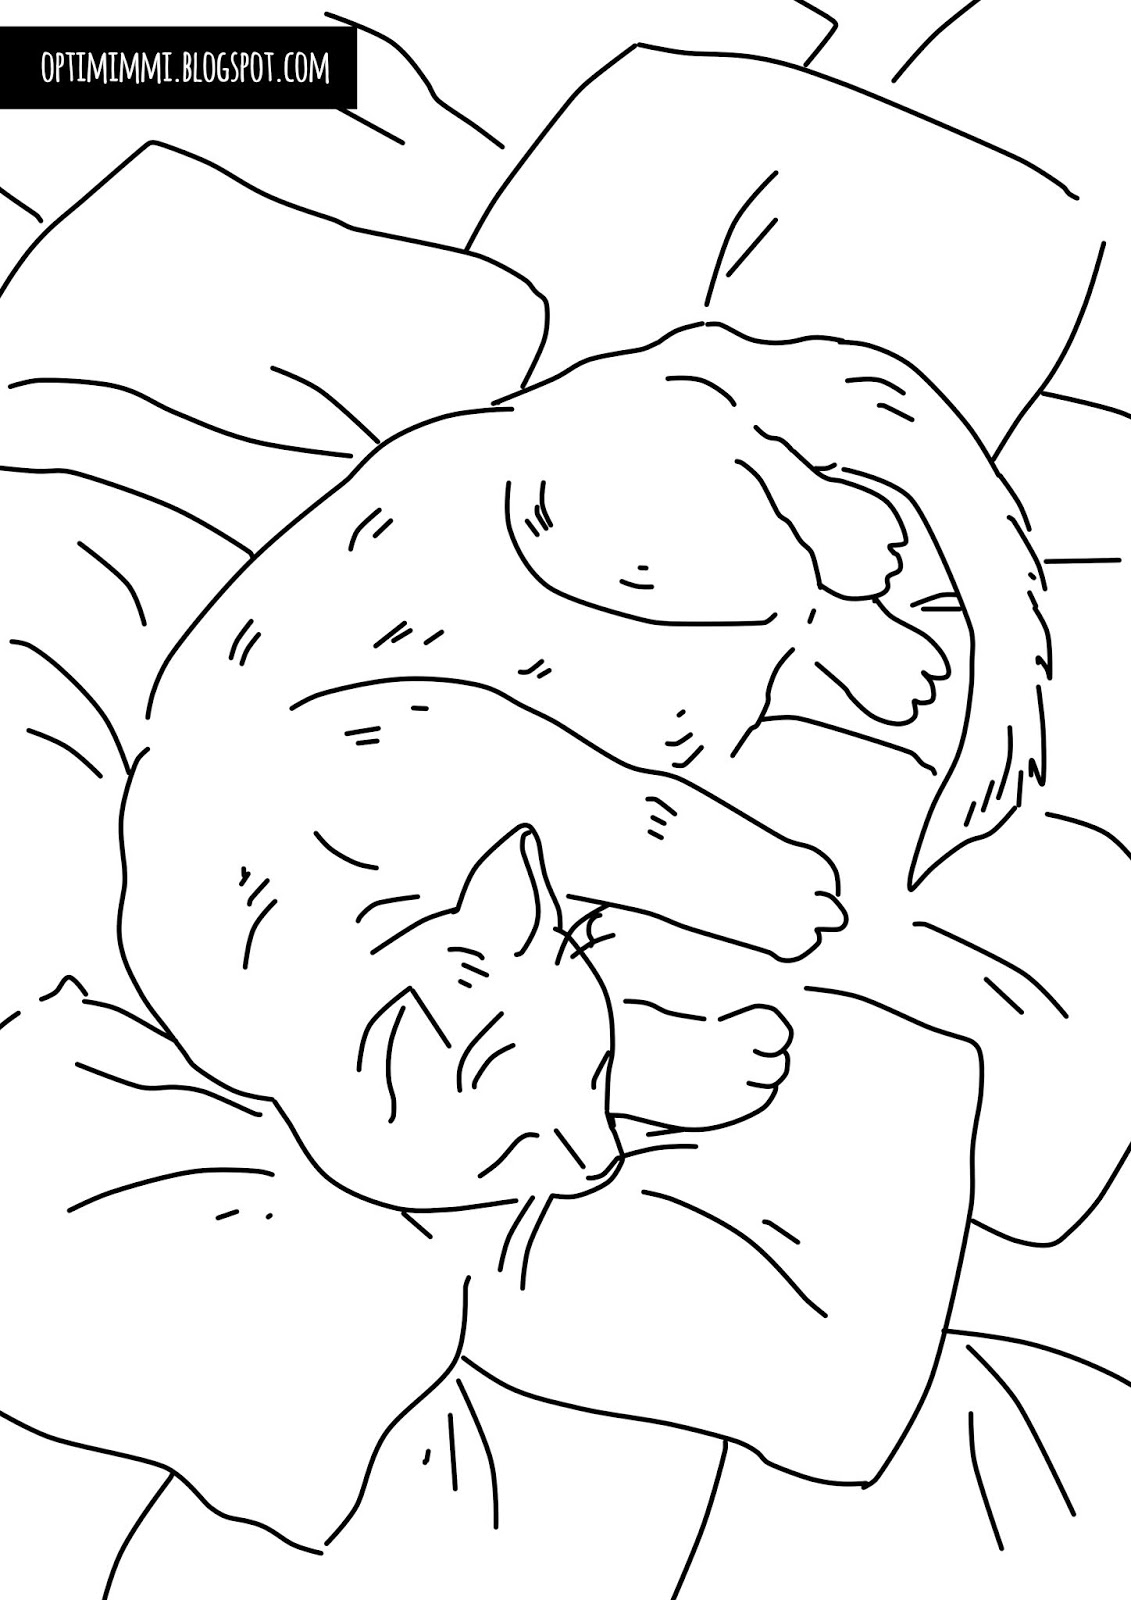 Download A sleeping cat (a coloring page) / Nukkuva kissa (värityskuva)